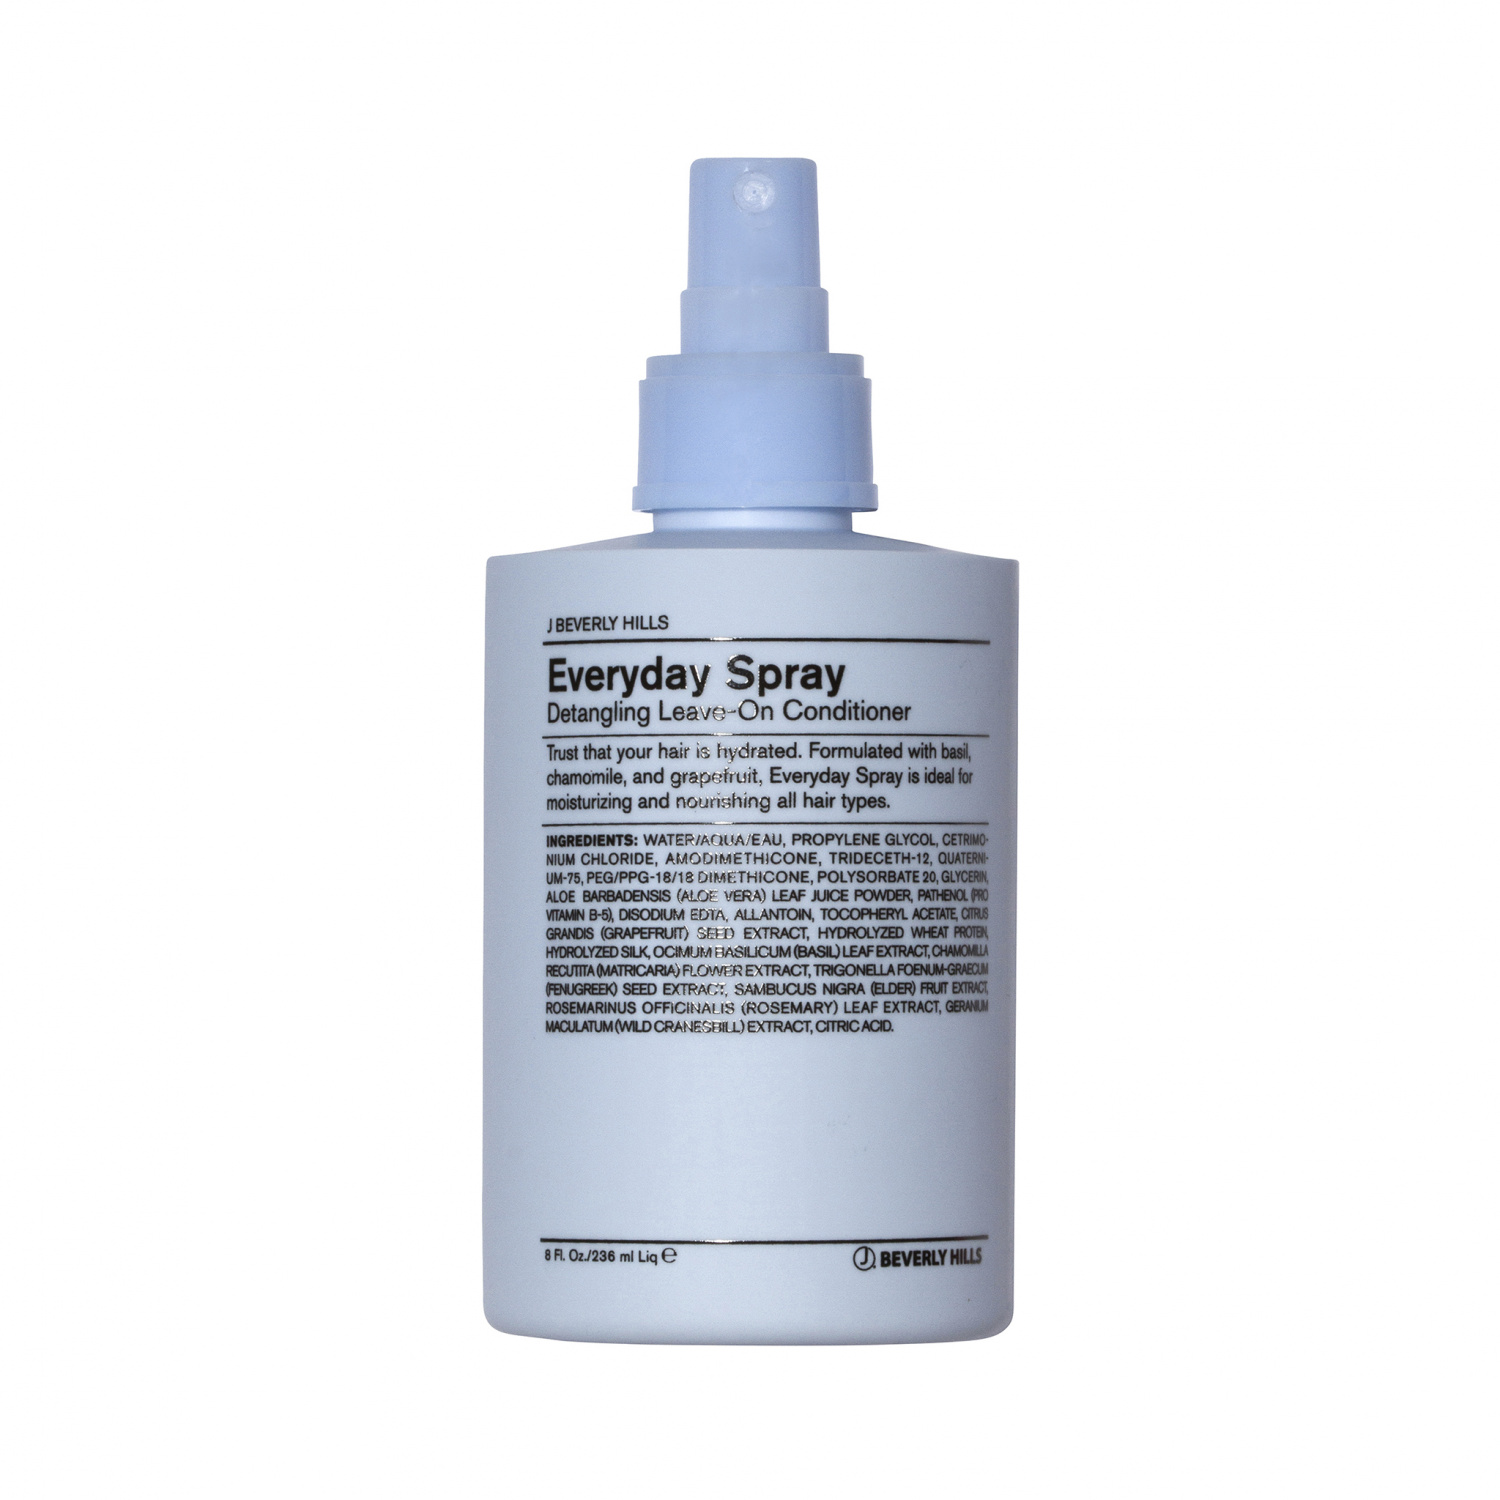 J Beverly Hills Everyday Spray Detangling Leave-On Conditioner 210ml - интернет-магазин профессиональной косметики Spadream, изображение 36752